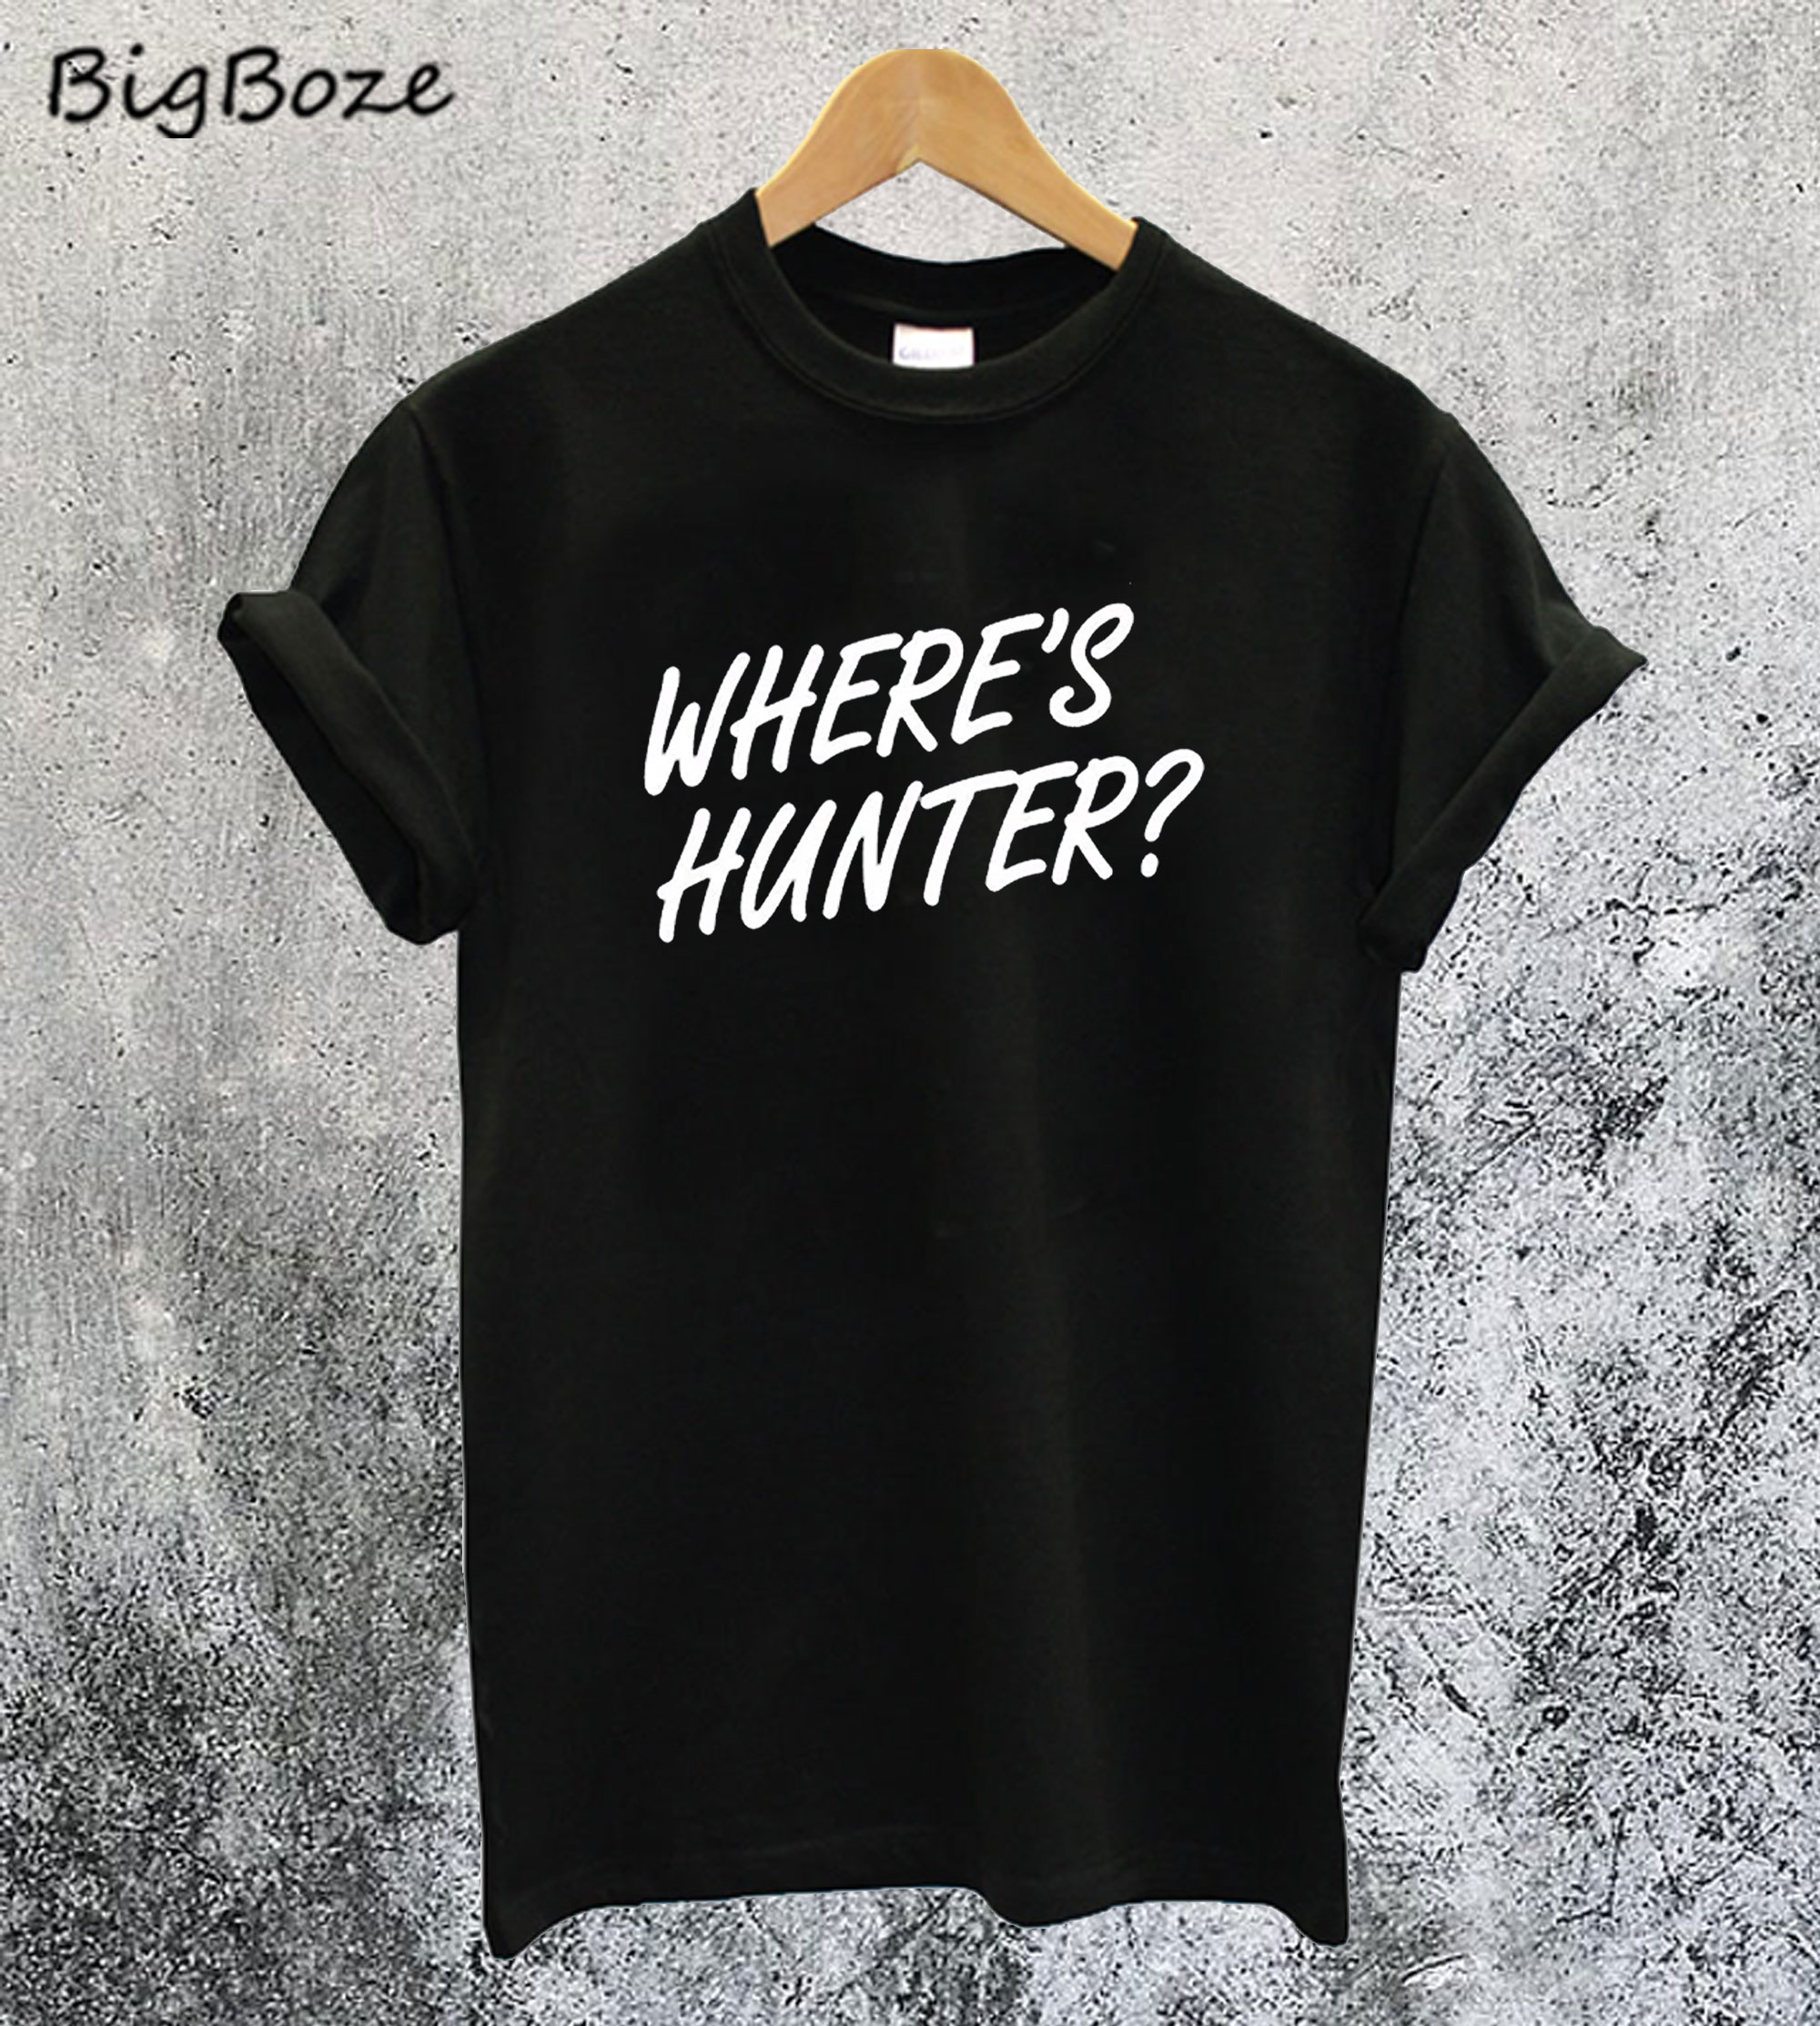 Where's Hunter T-Shirt